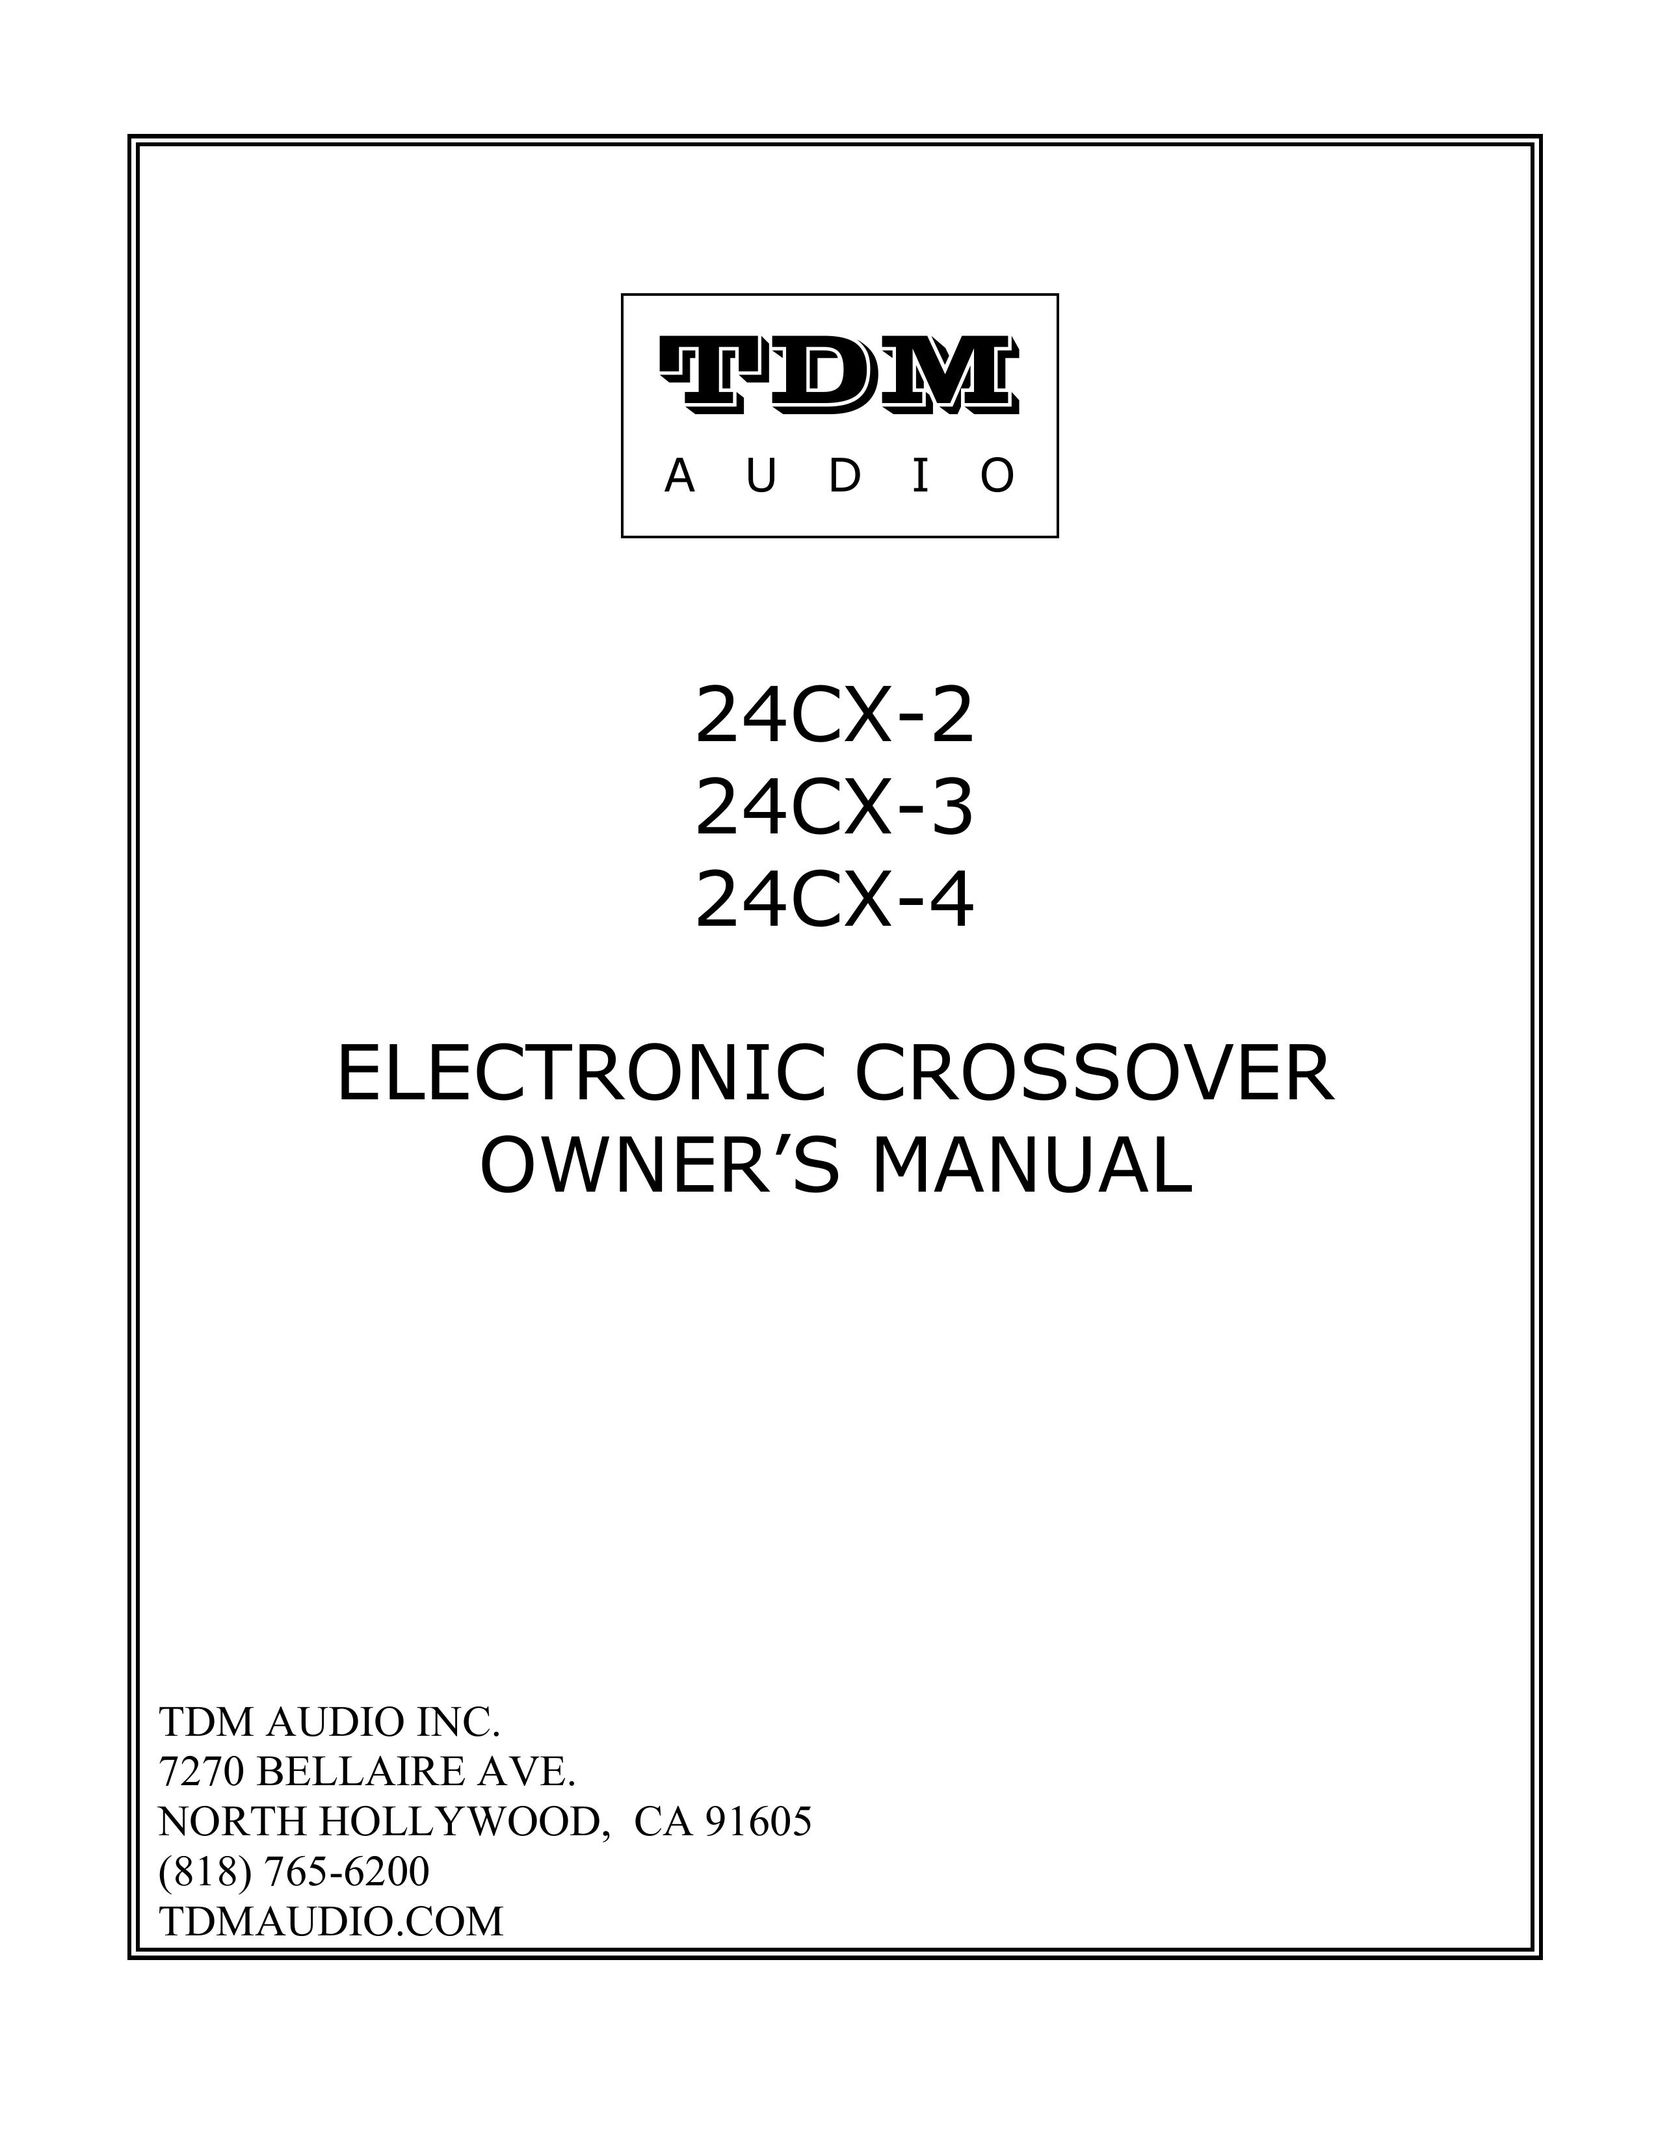 Hollywood 24CX-2 Portable Speaker User Manual